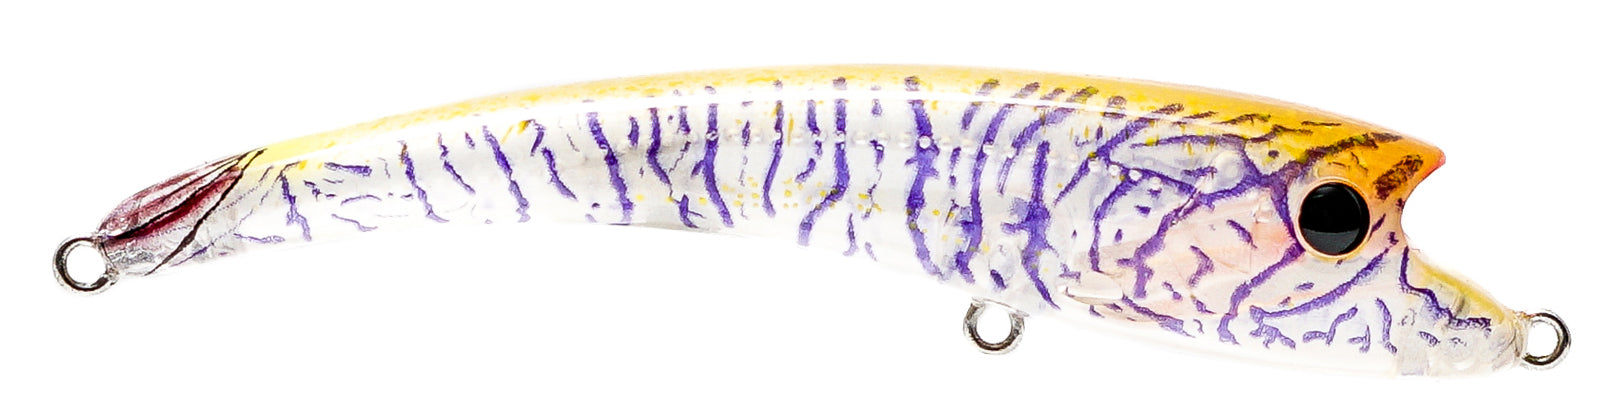 Nomad Design Maverick - 115mm - Holographic Purple Shrimp